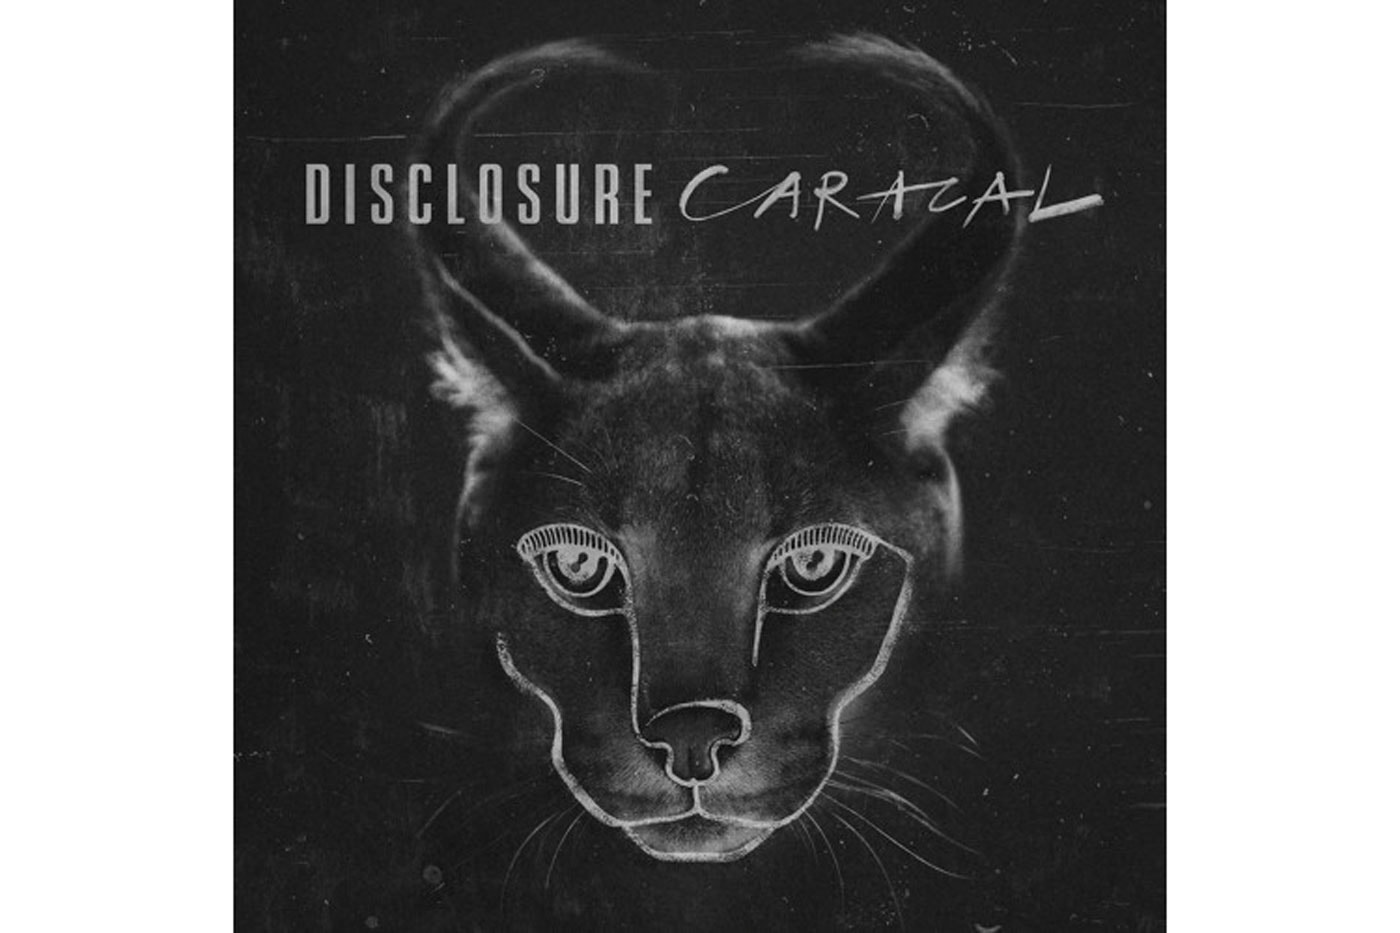 Disclosure - Echoes